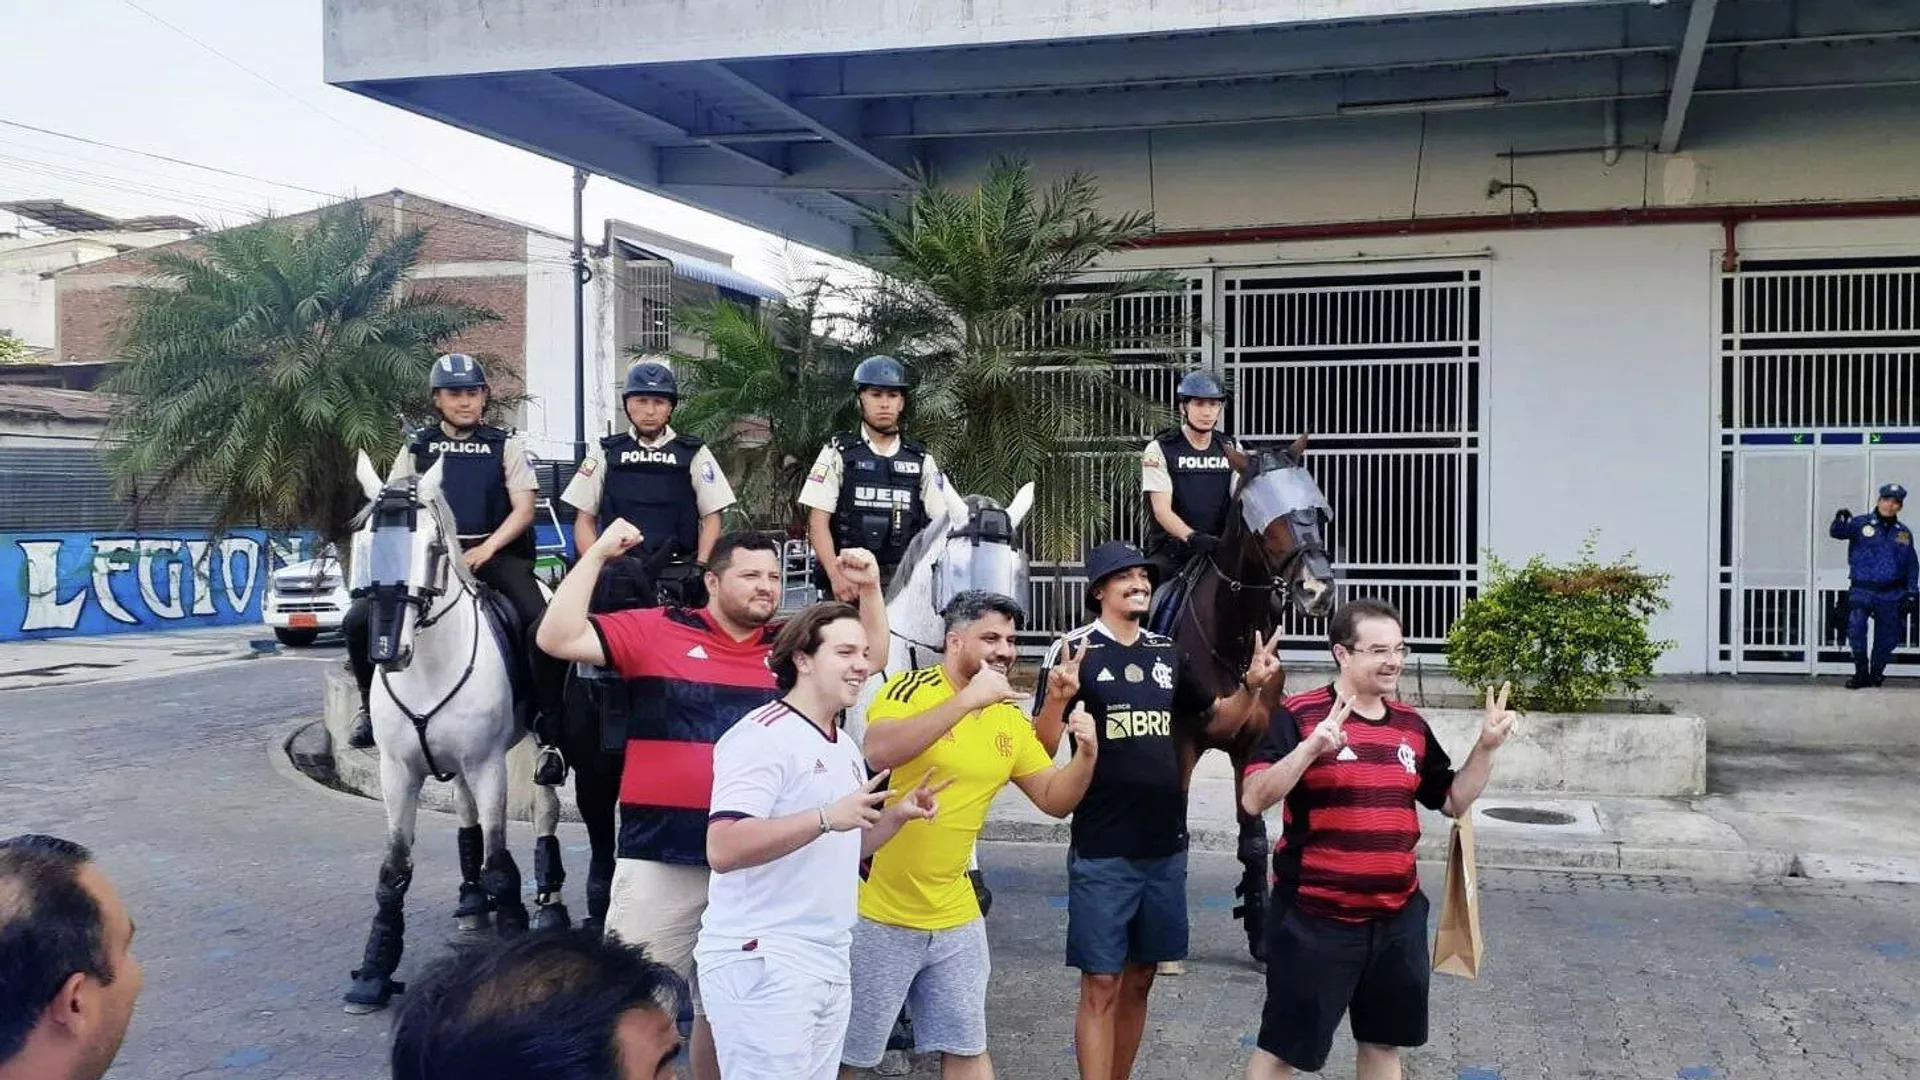 Unusual security deployment for Copa Libertadores final in Ecuador. (Photo internet reproduction)